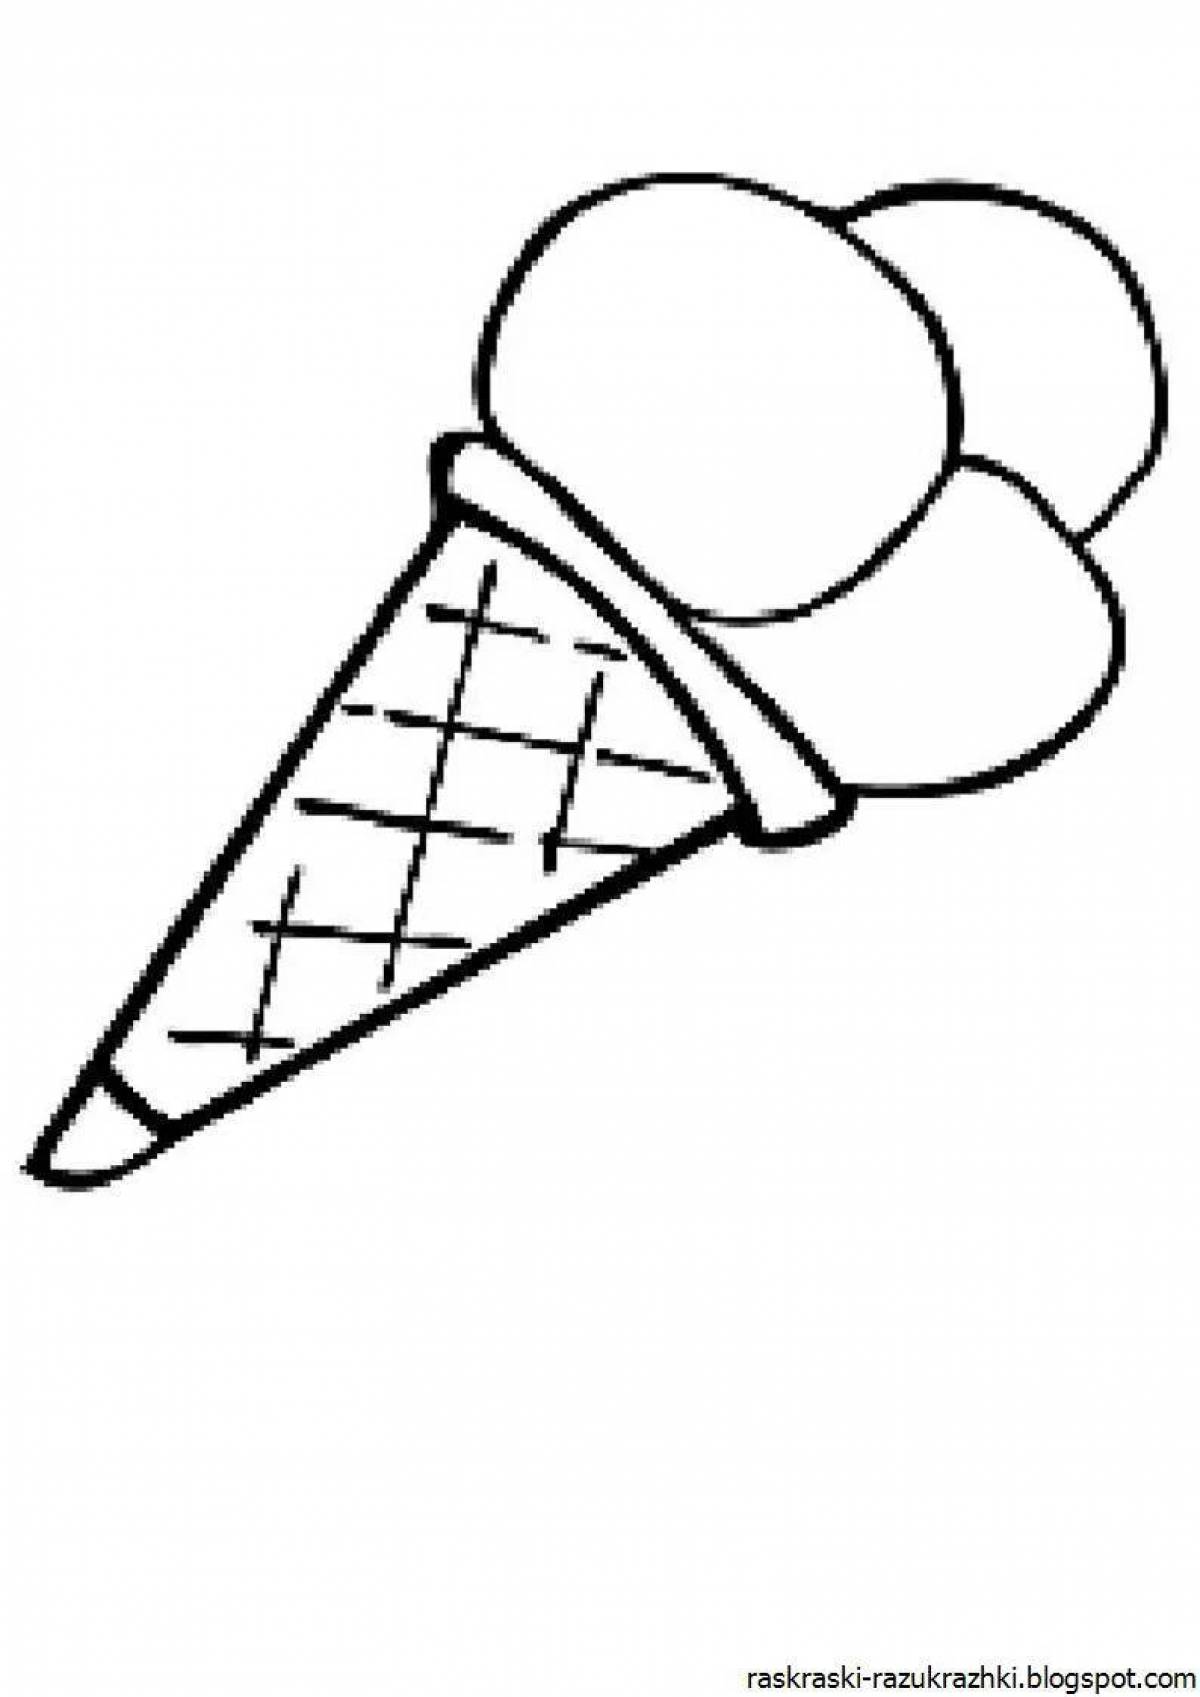 Раскраска мороженки. Раскраска мороженое. Мороженое раскраска для детей. Раскраска для девочек мороженое. Картинка мороженое раскраска.